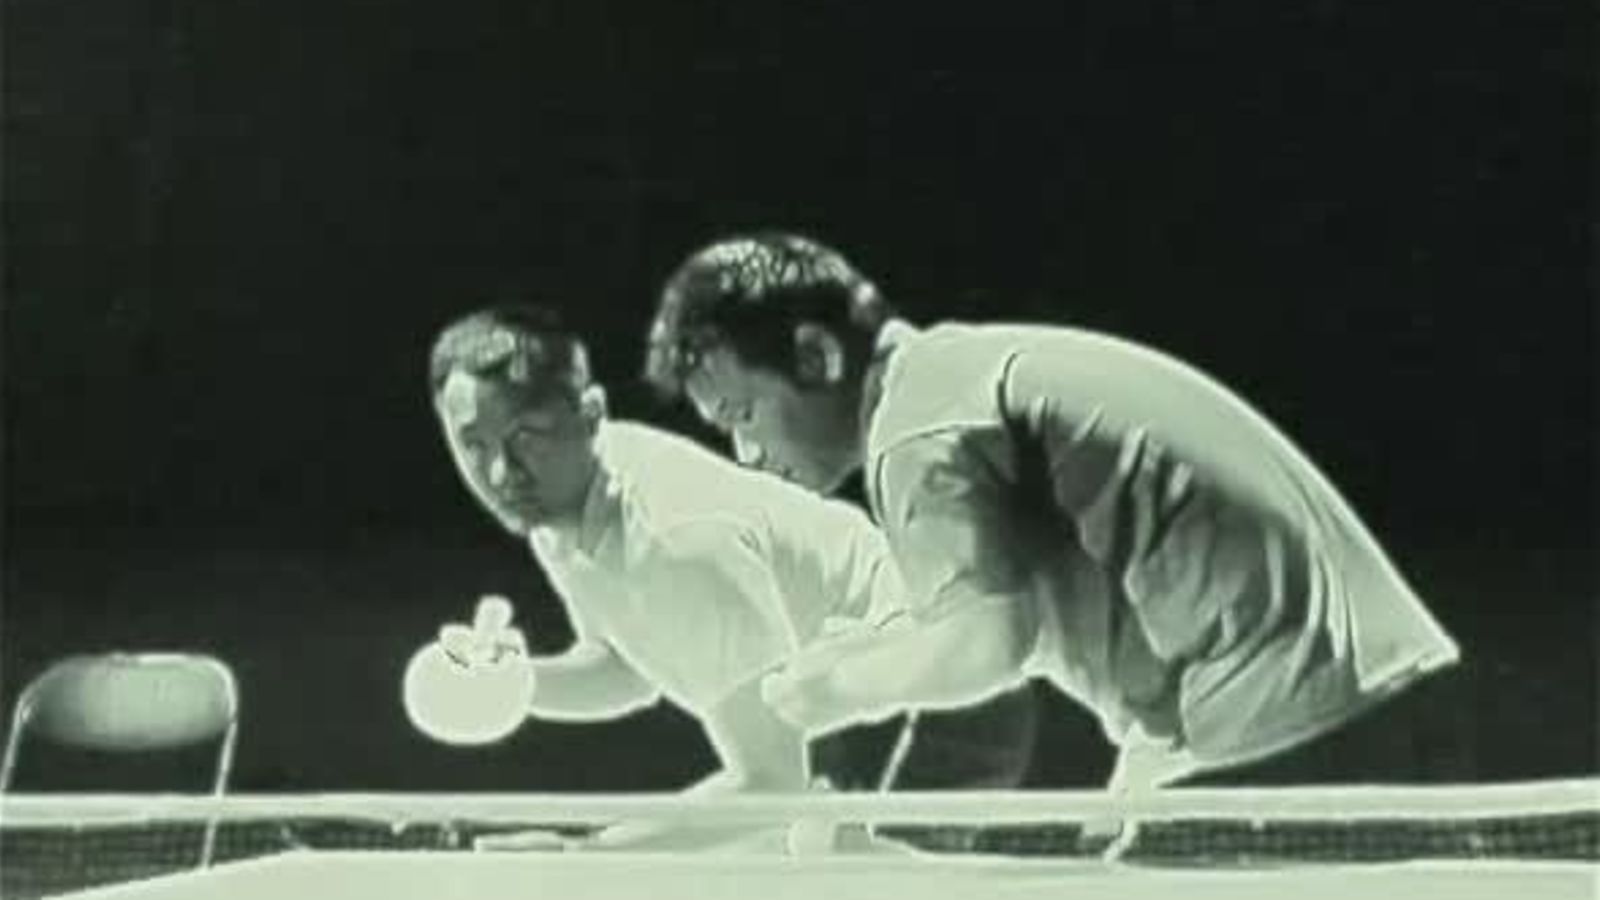 Watch Guarda Bruce Lee che a ping pong con il | Wired Italia